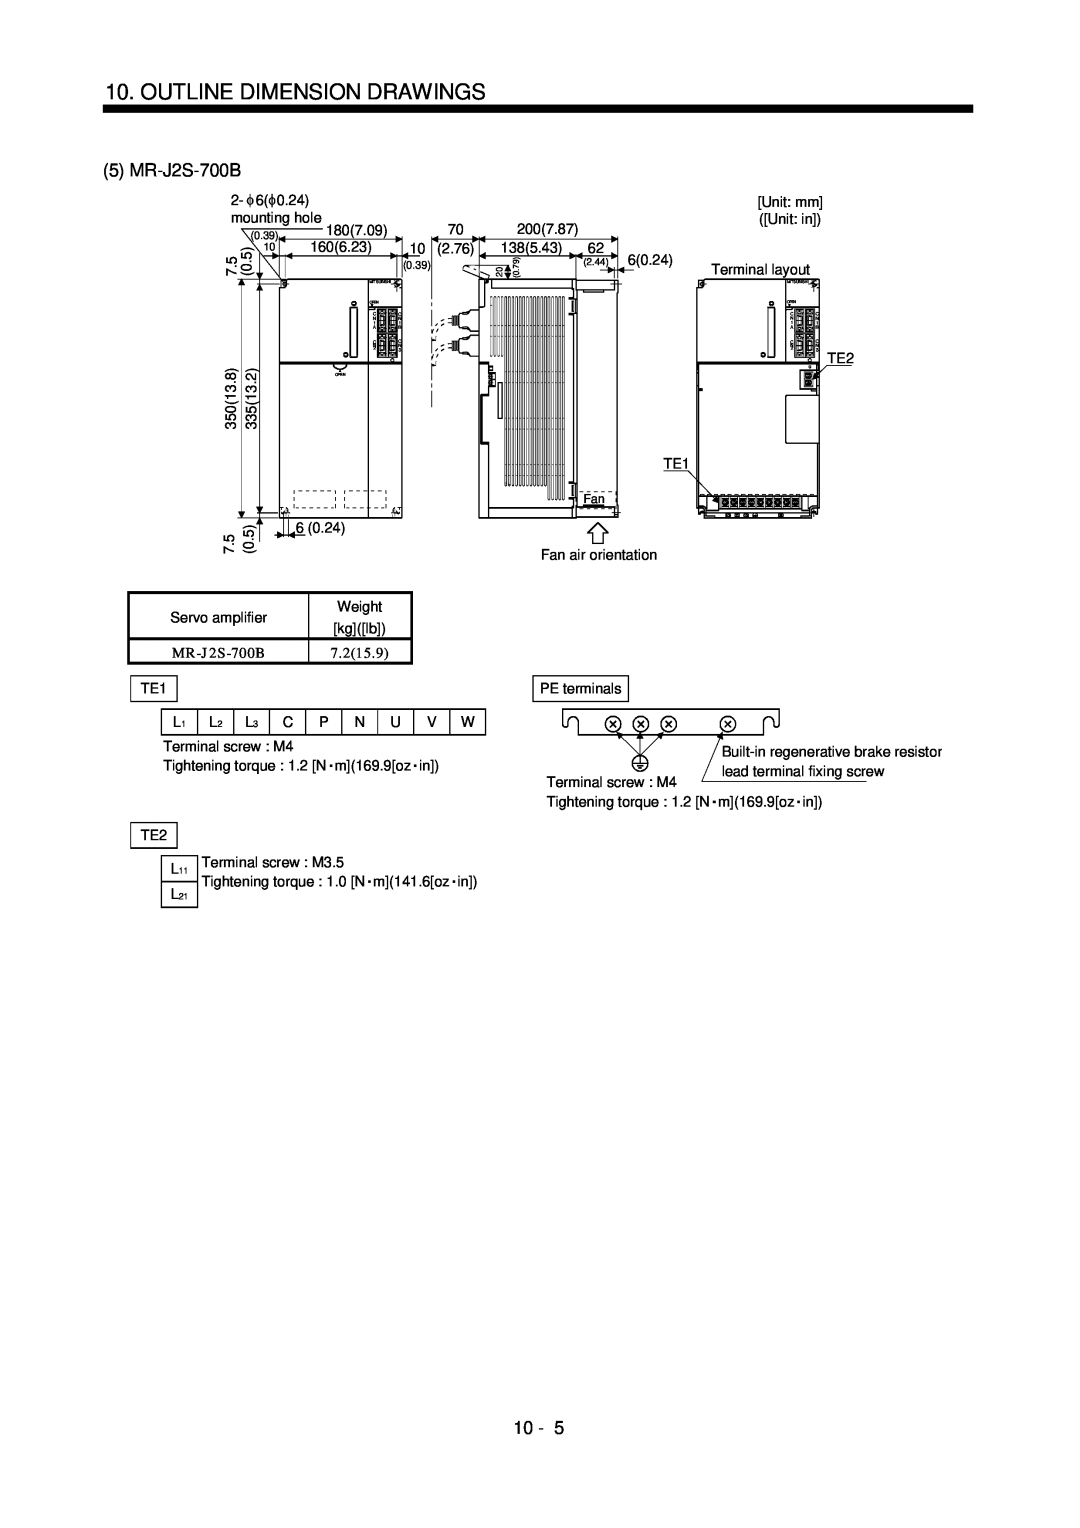 Bose MR-J2S- B instruction manual MR-J2S-700B, Outline Dimension Drawings, 10 